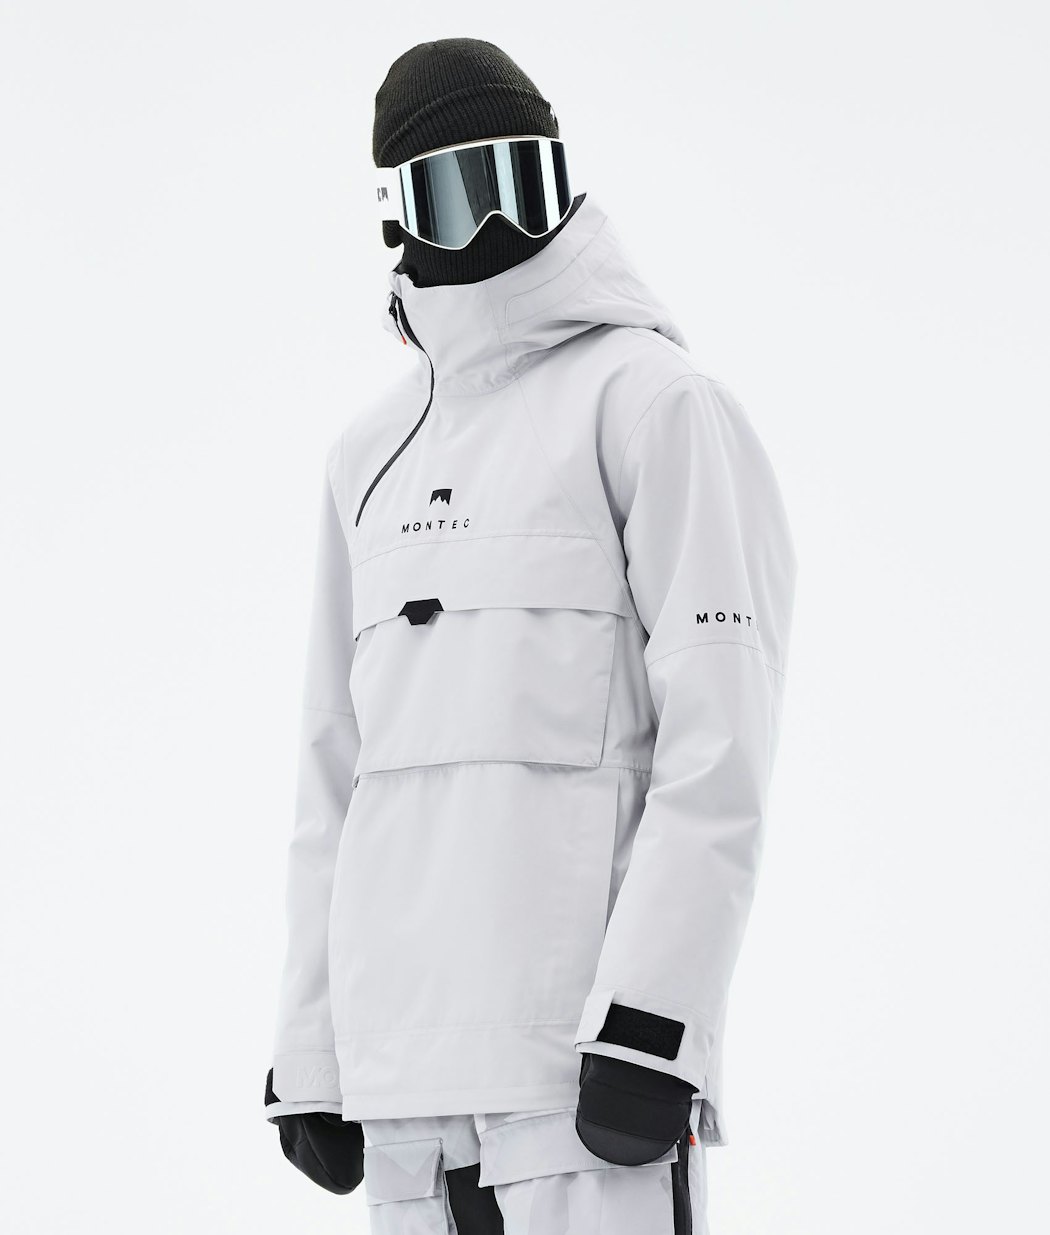 Dune 2021 Veste Snowboard Homme Light Grey